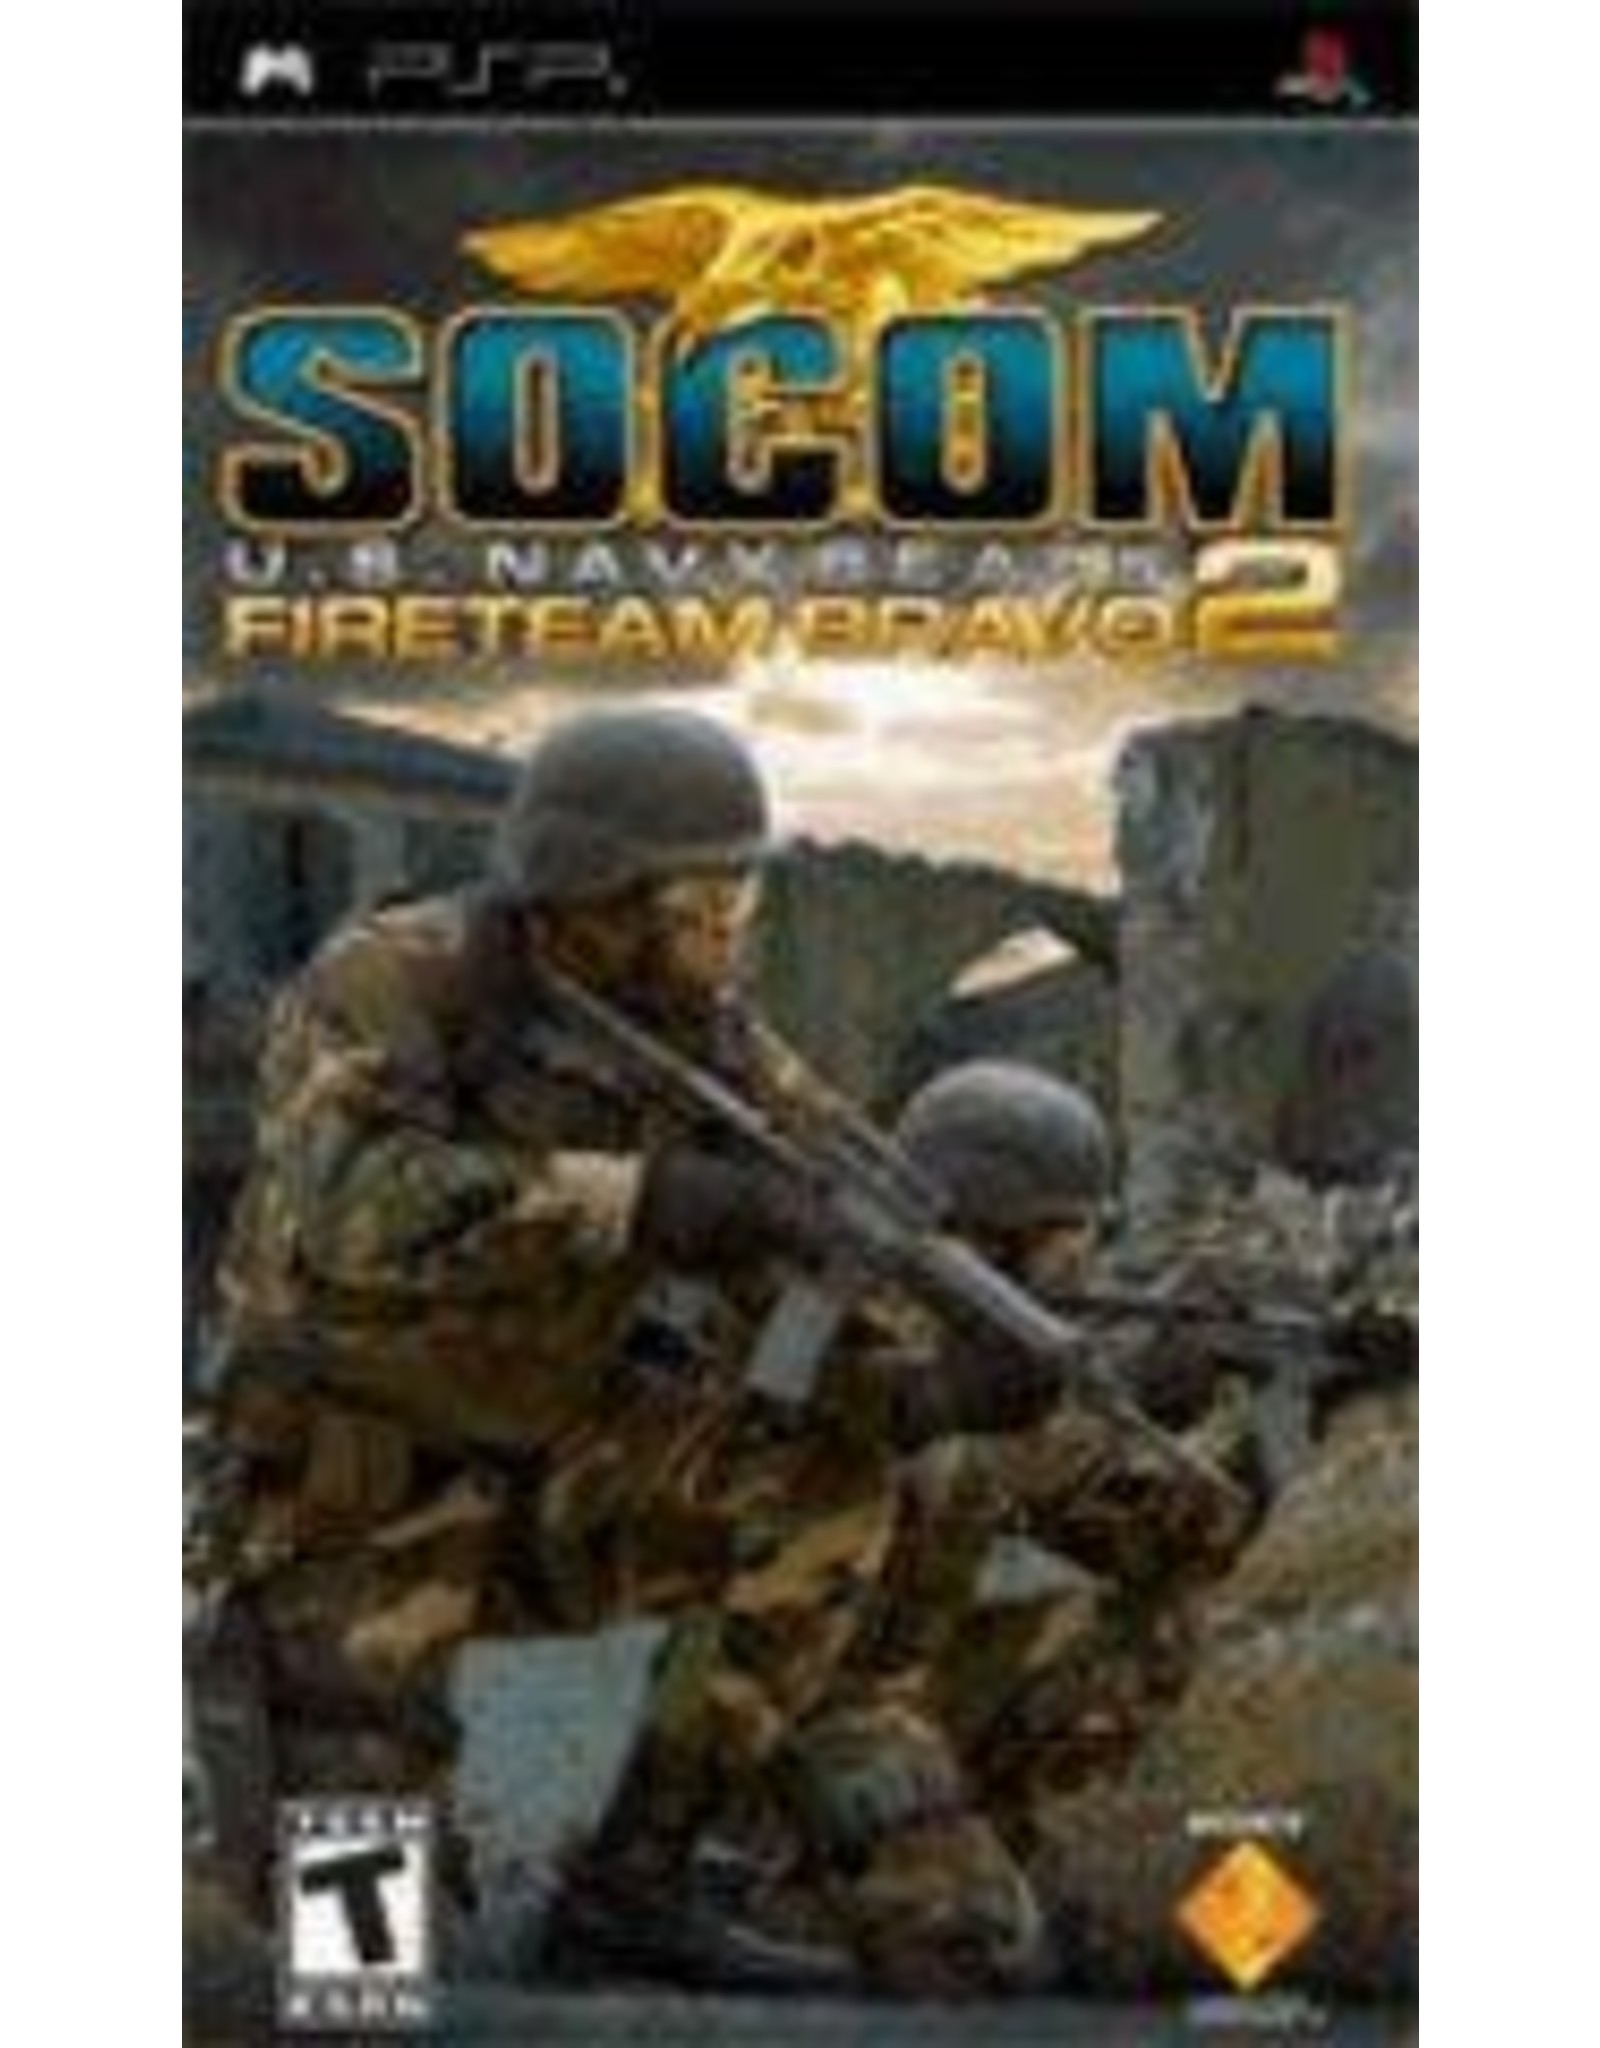 SOCOM US NAVY SEAL FIRETEAM BRAVO GREATEST HITS (PSP PORTABLE PLAYSTATION)